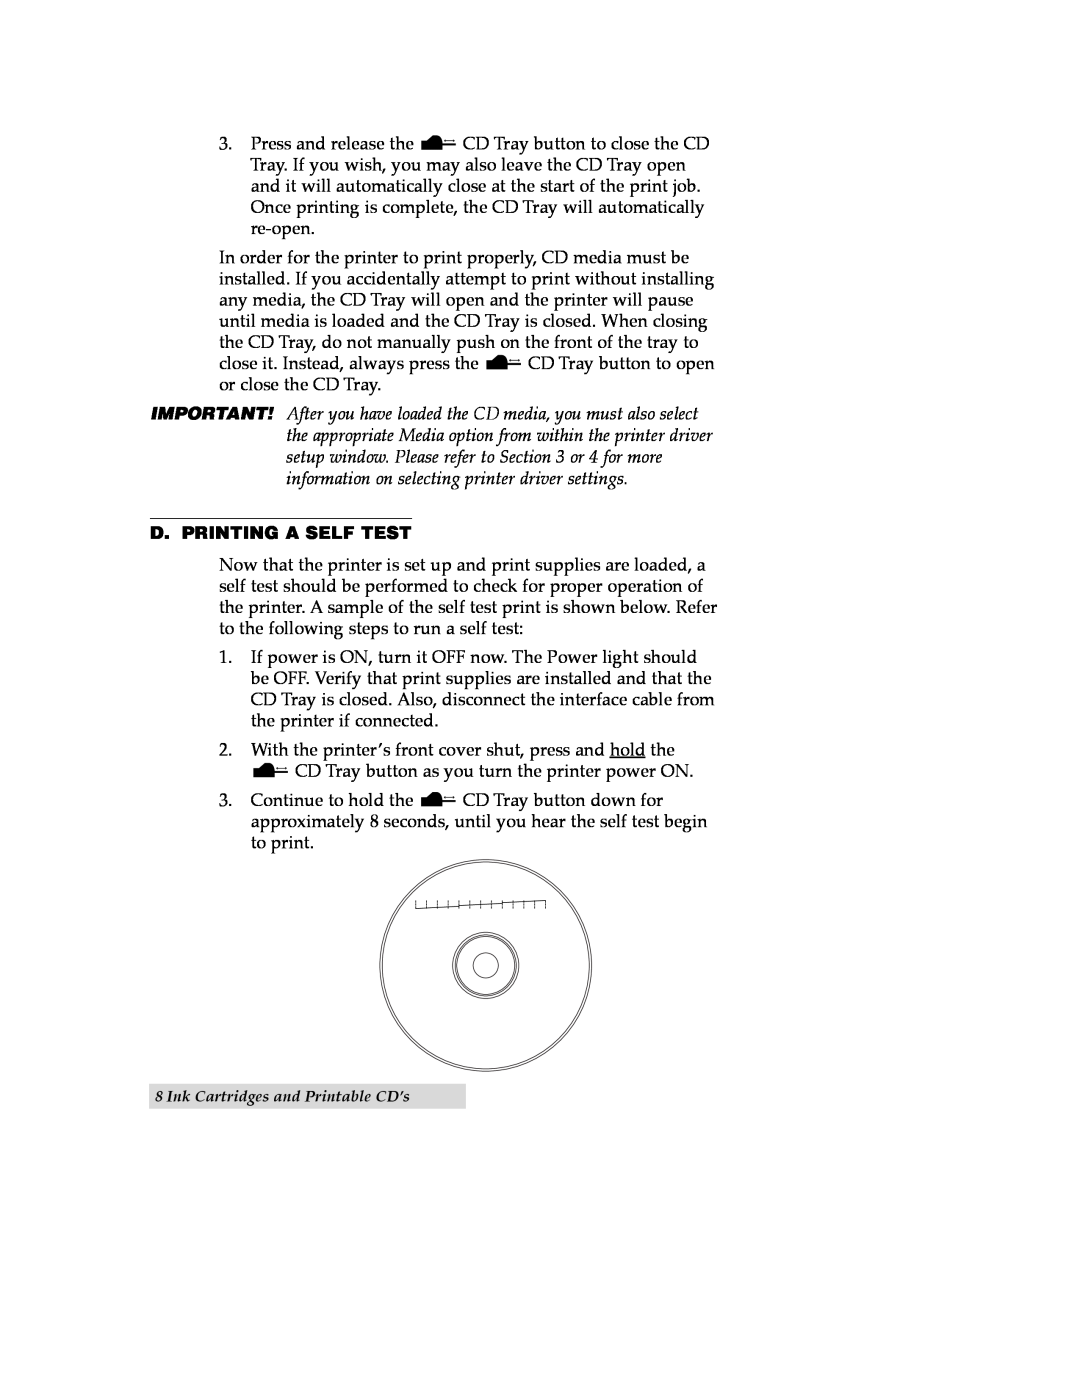 Primera Technology CD Color Printer II manual D. Printing A Self Test 